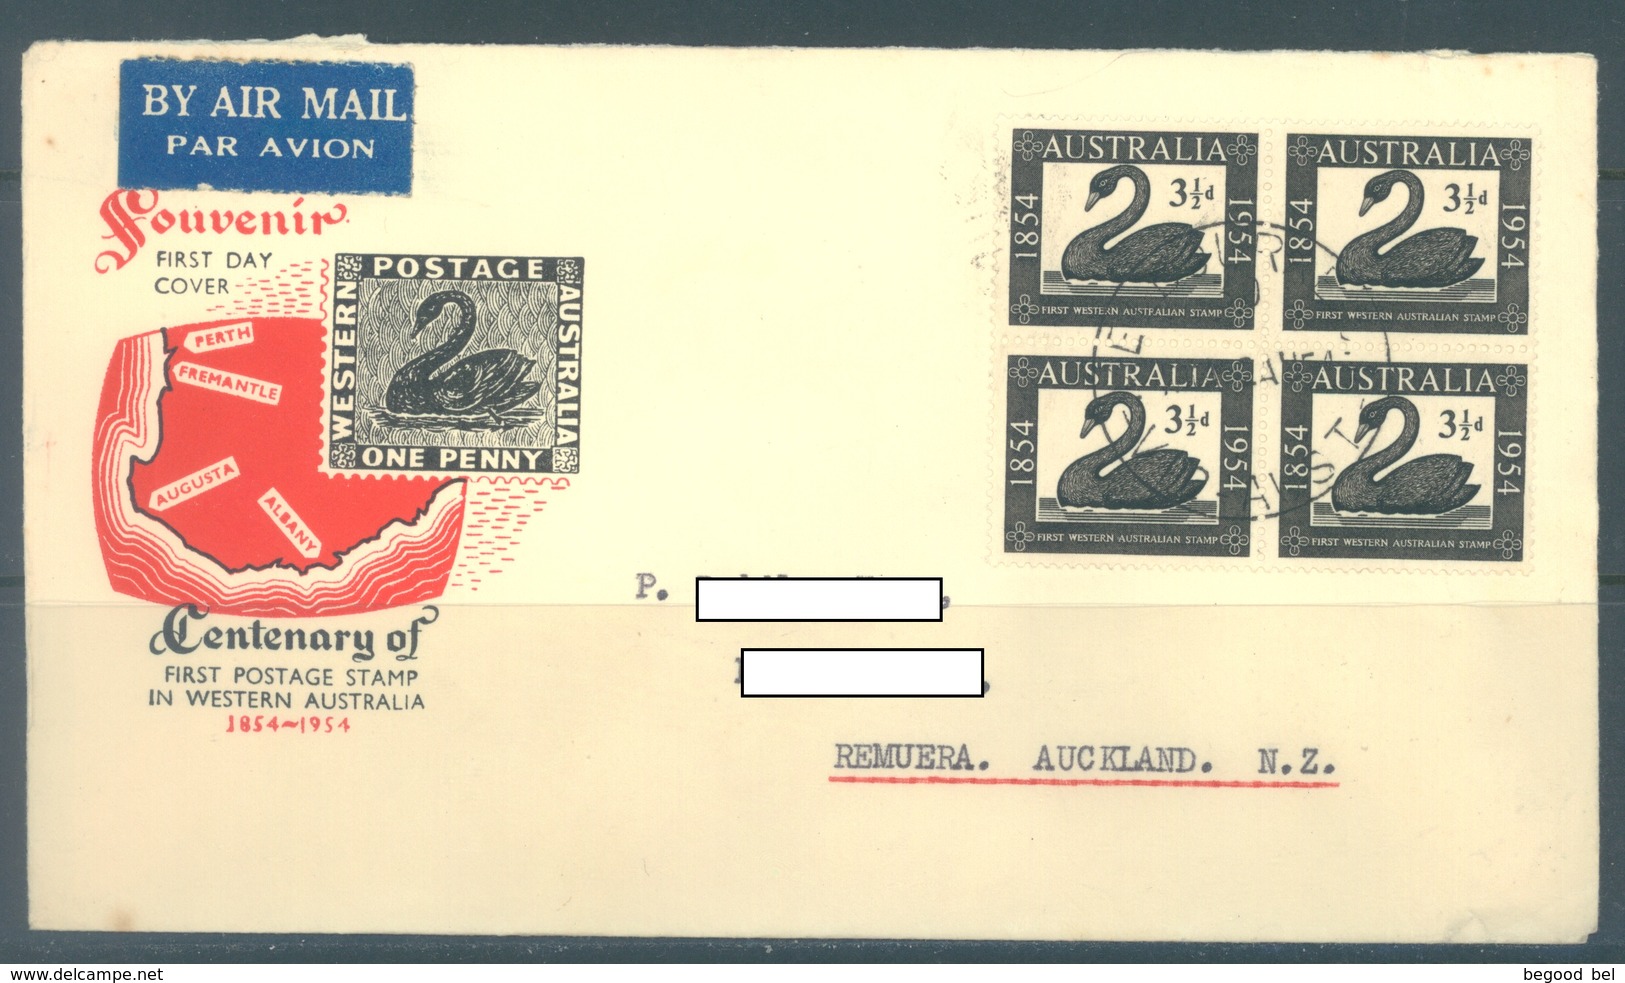 AUSTRALIA -  FDC  - 2.8.1954 - WESTERN AUSTRALIAN  FIRST STAMP CENTENARY - Yv 4 X 212  - Lot 19368 - Premiers Jours (FDC)